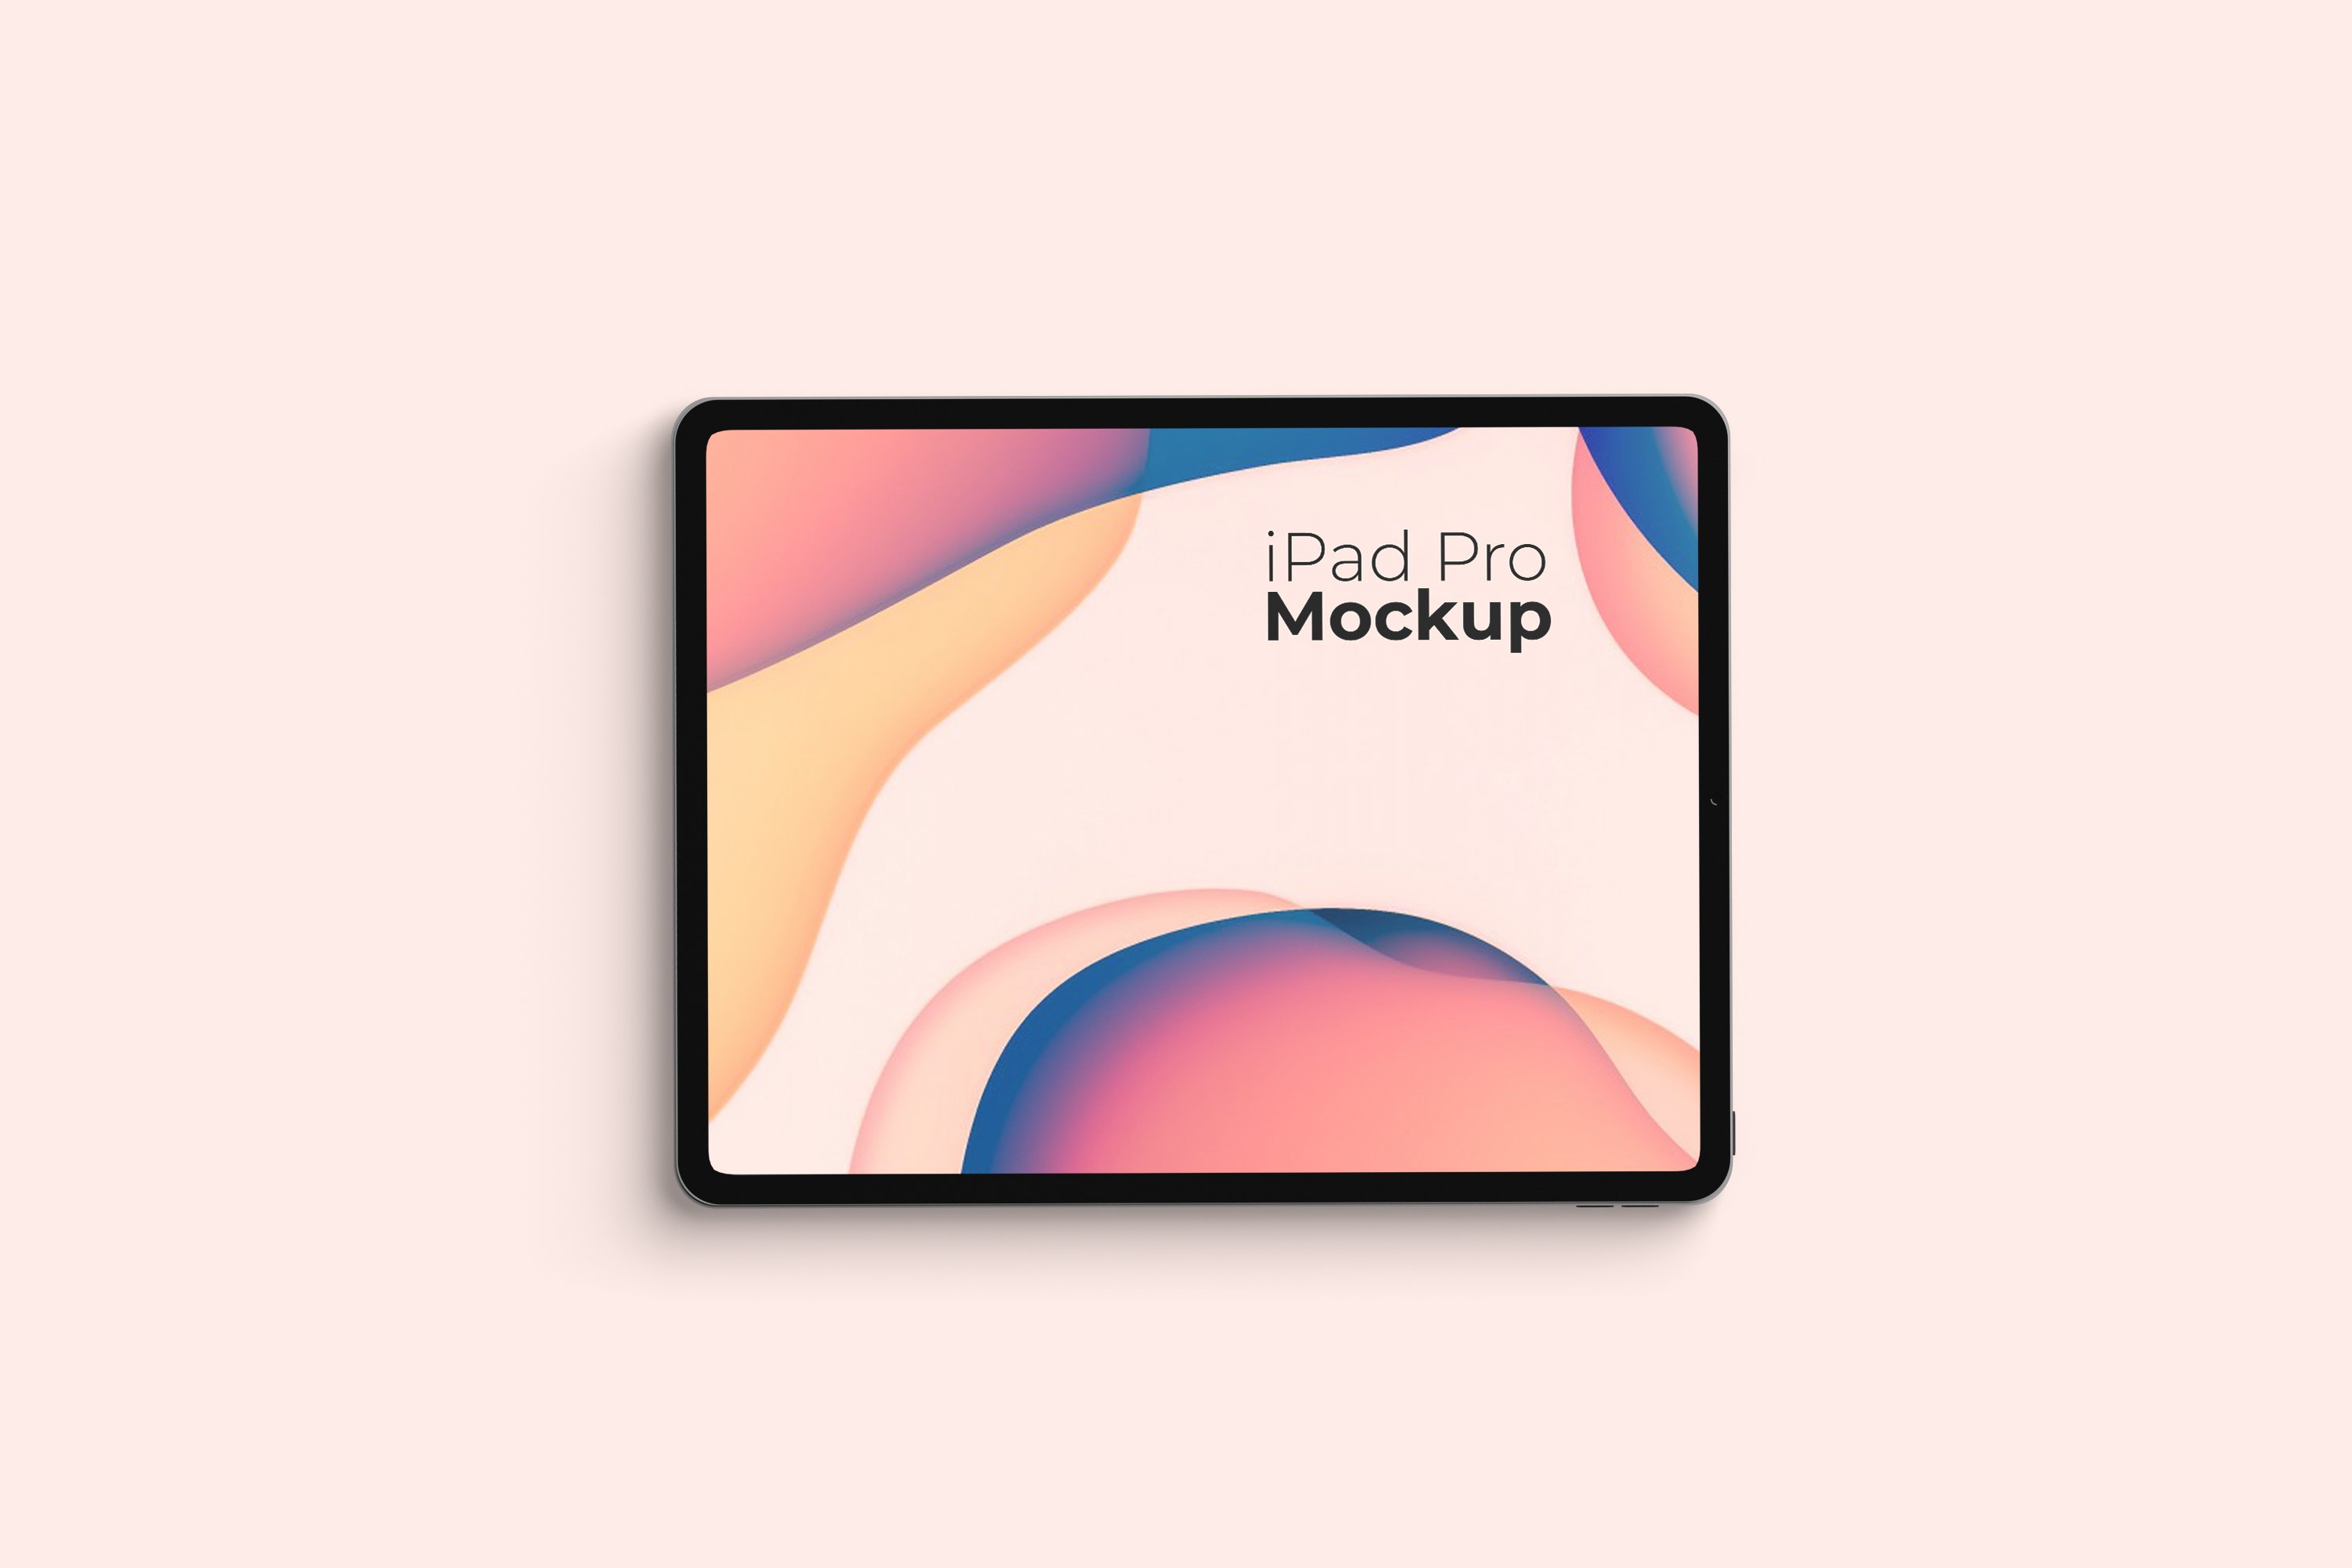 iPad Pro Mockup V2 cover image.